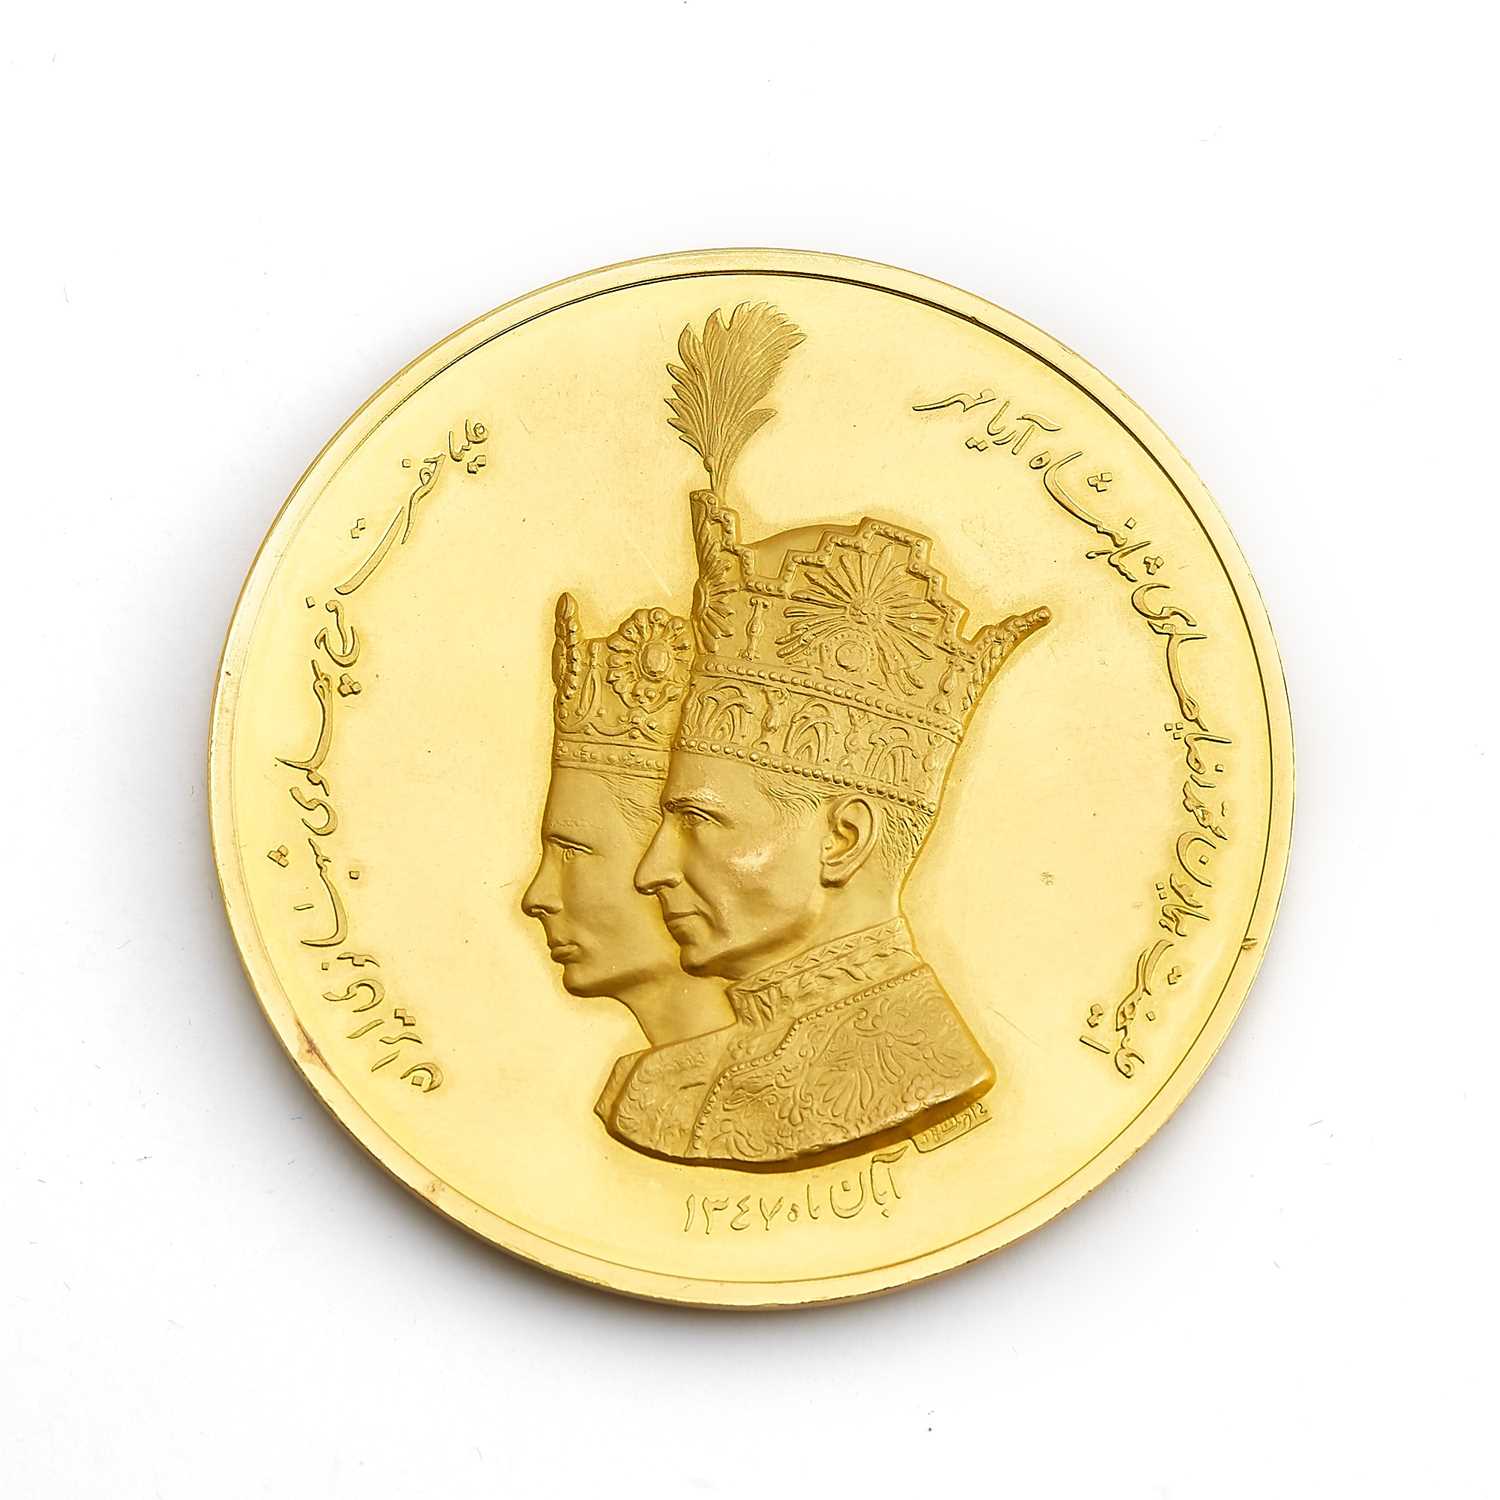 Lot 1156 - Iran Coronation Gold Medal for Mohammad Reza Palhlevi SH1347 (1967)